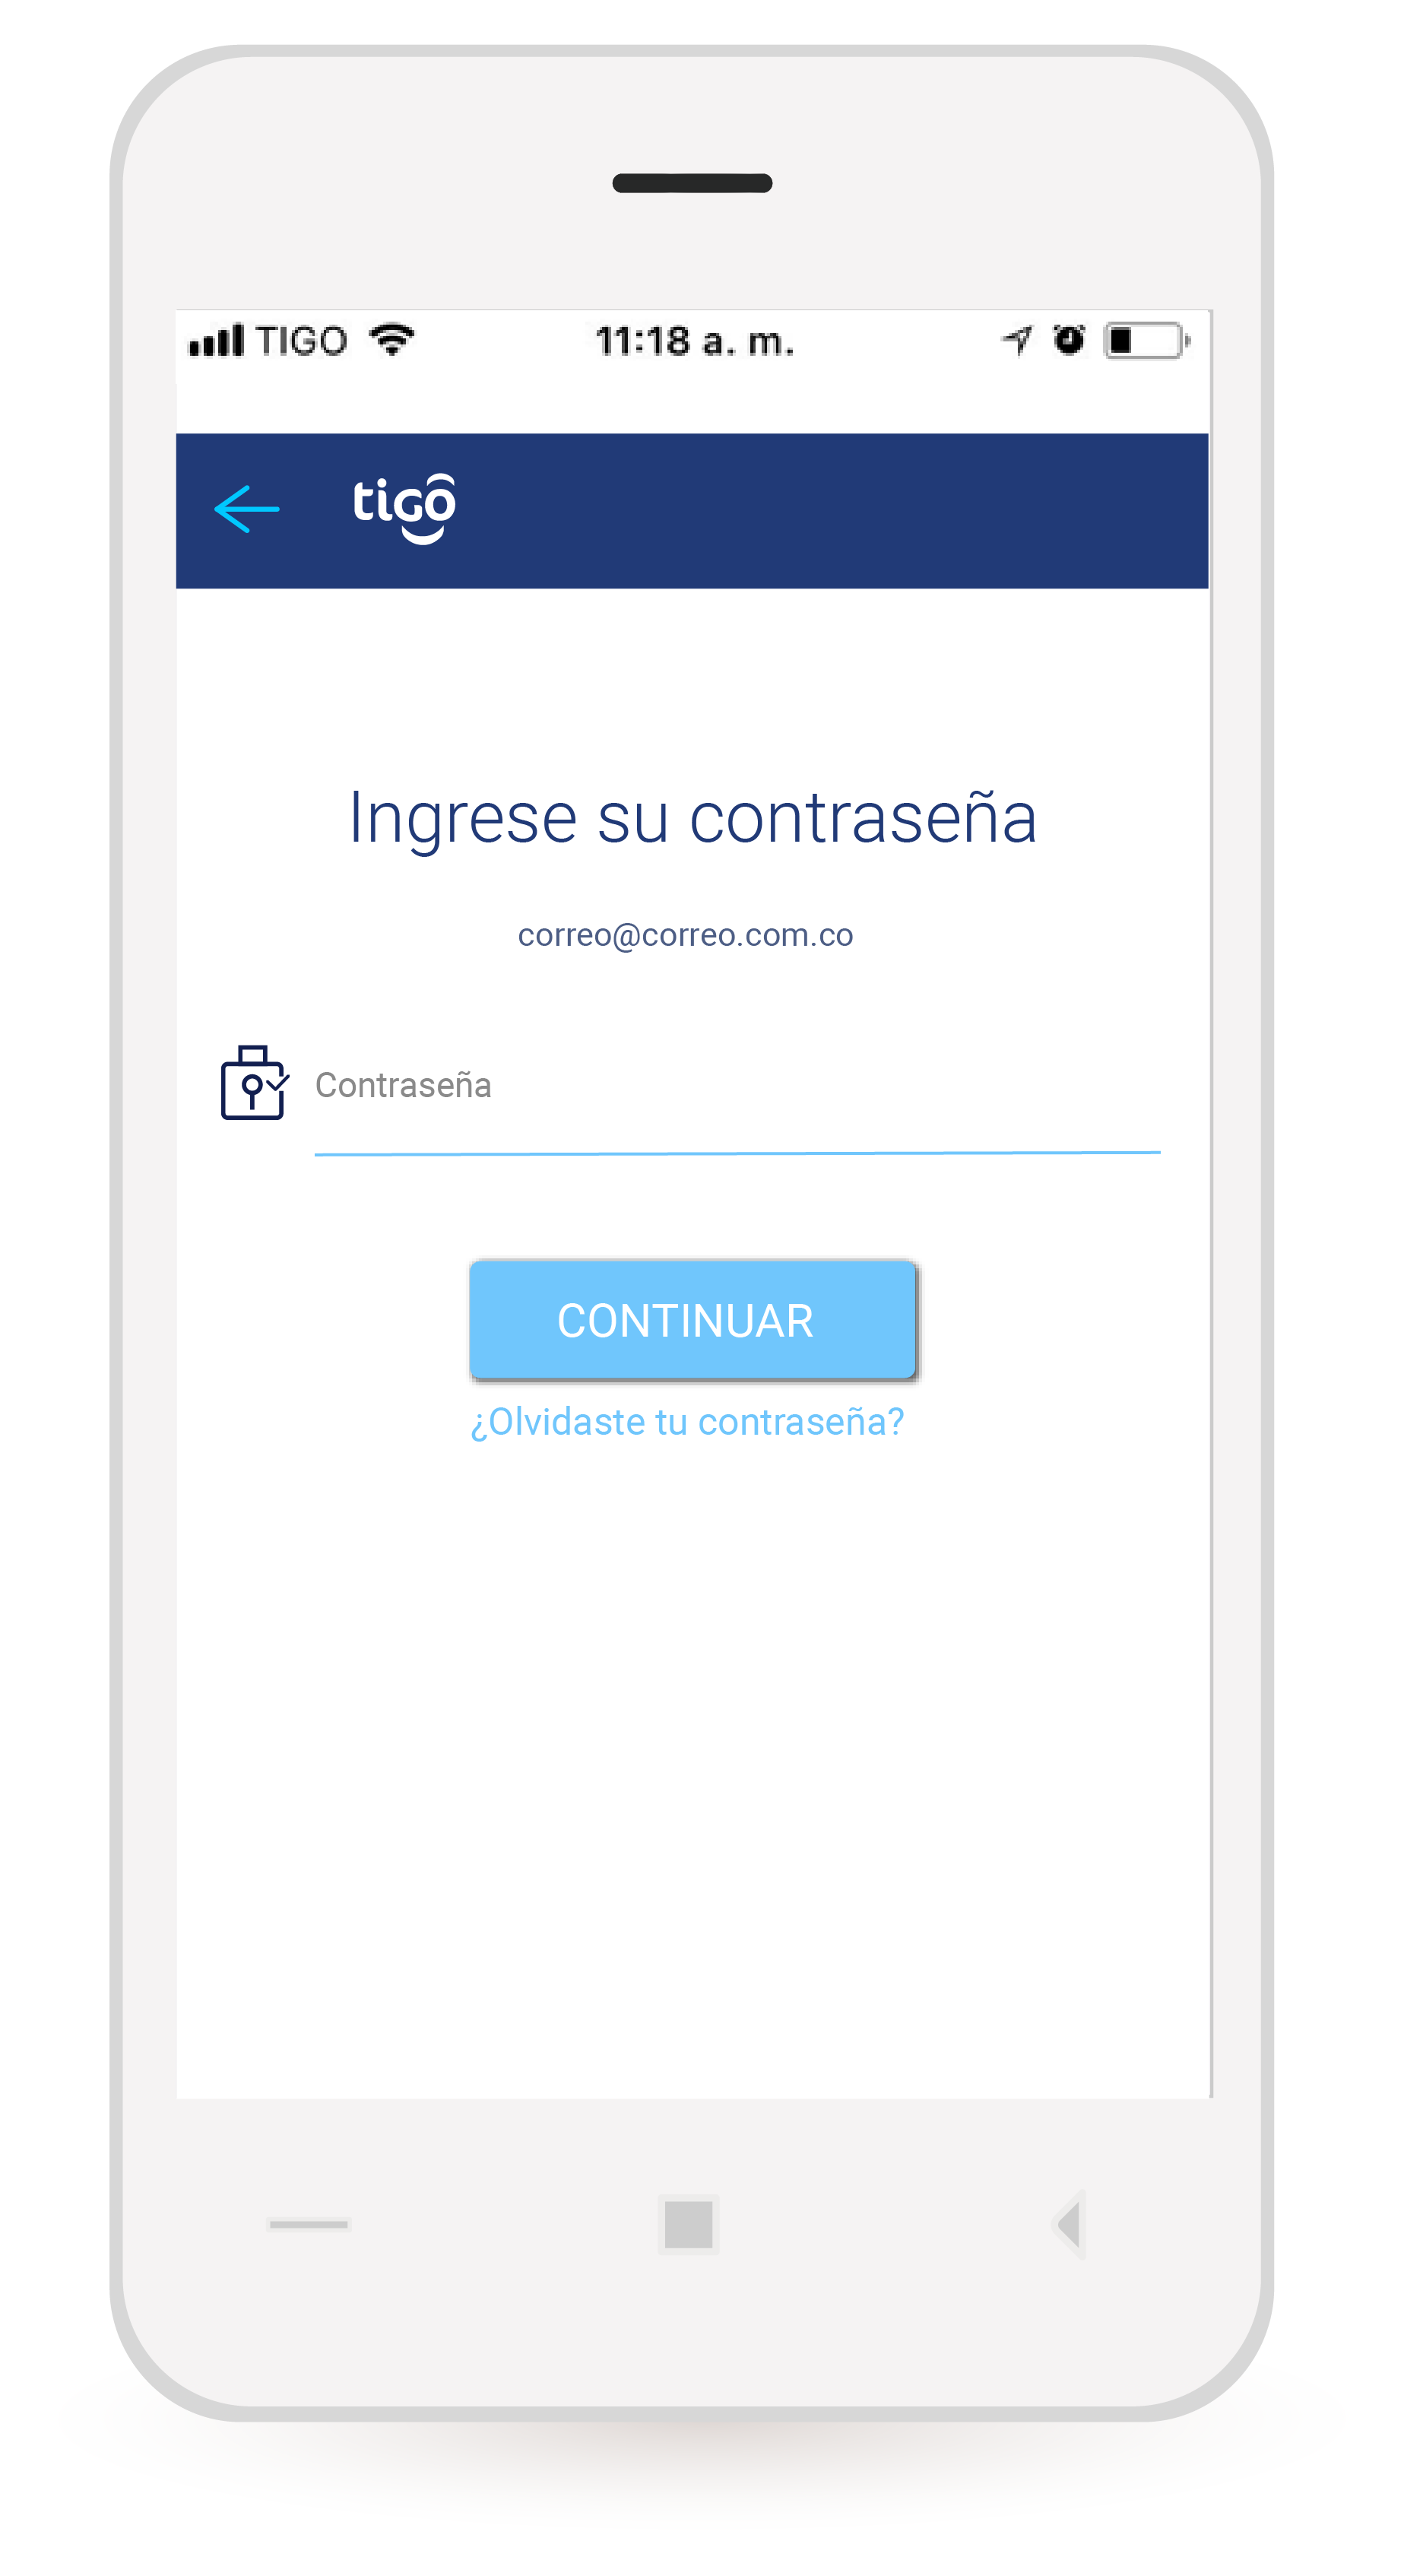 aw-registro-app-onetv-android